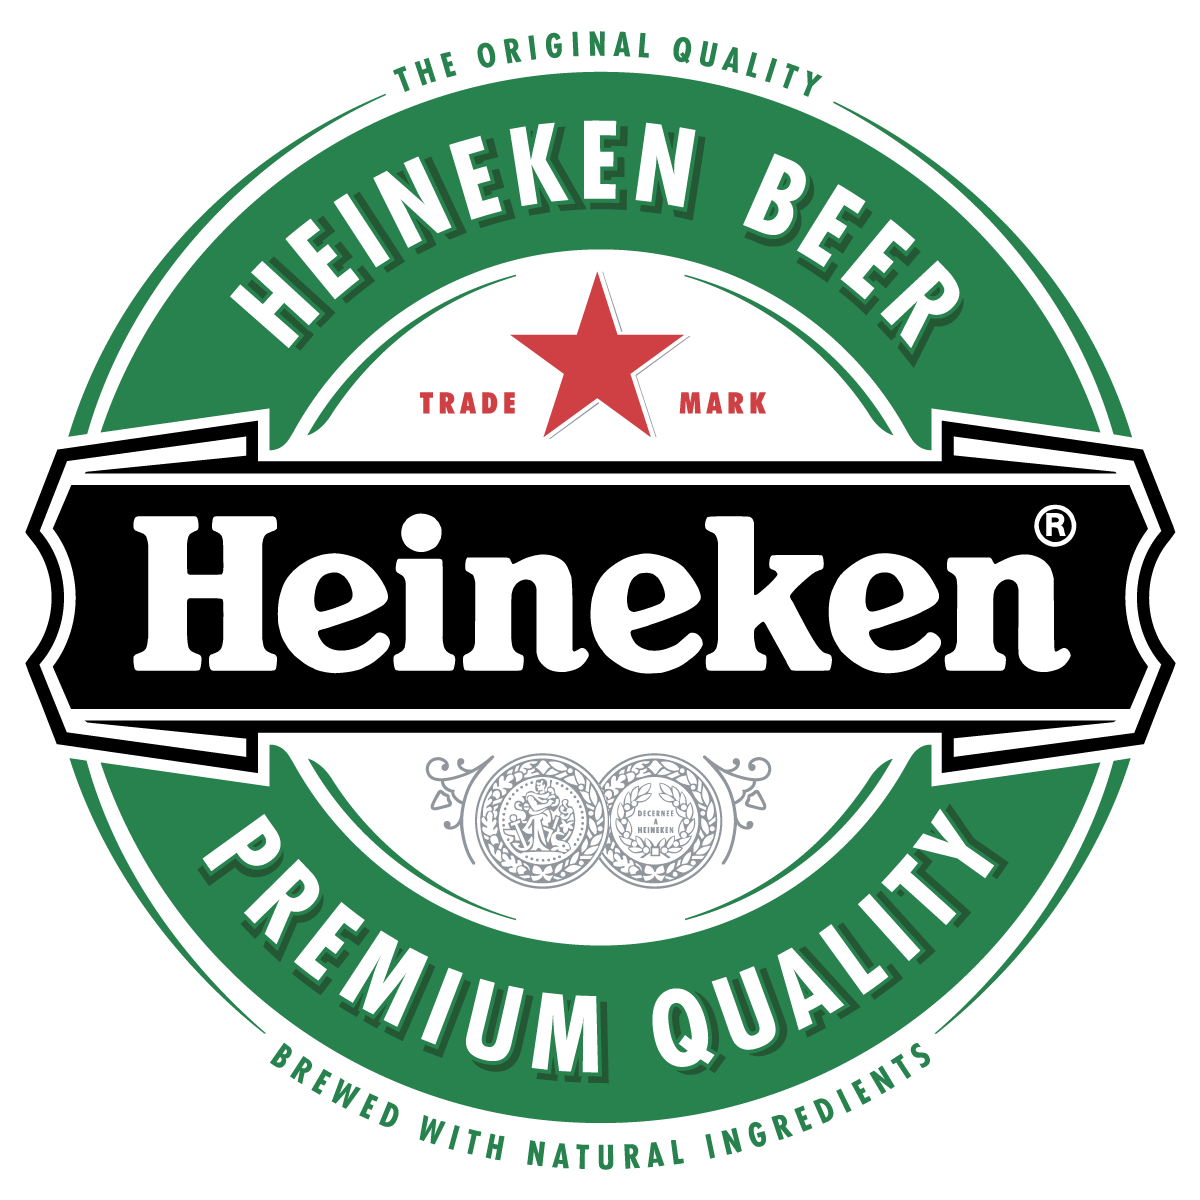 kisspng-heineken-logo-beer-label-organization-5ba9f868eb5ba9.273391531537865832964